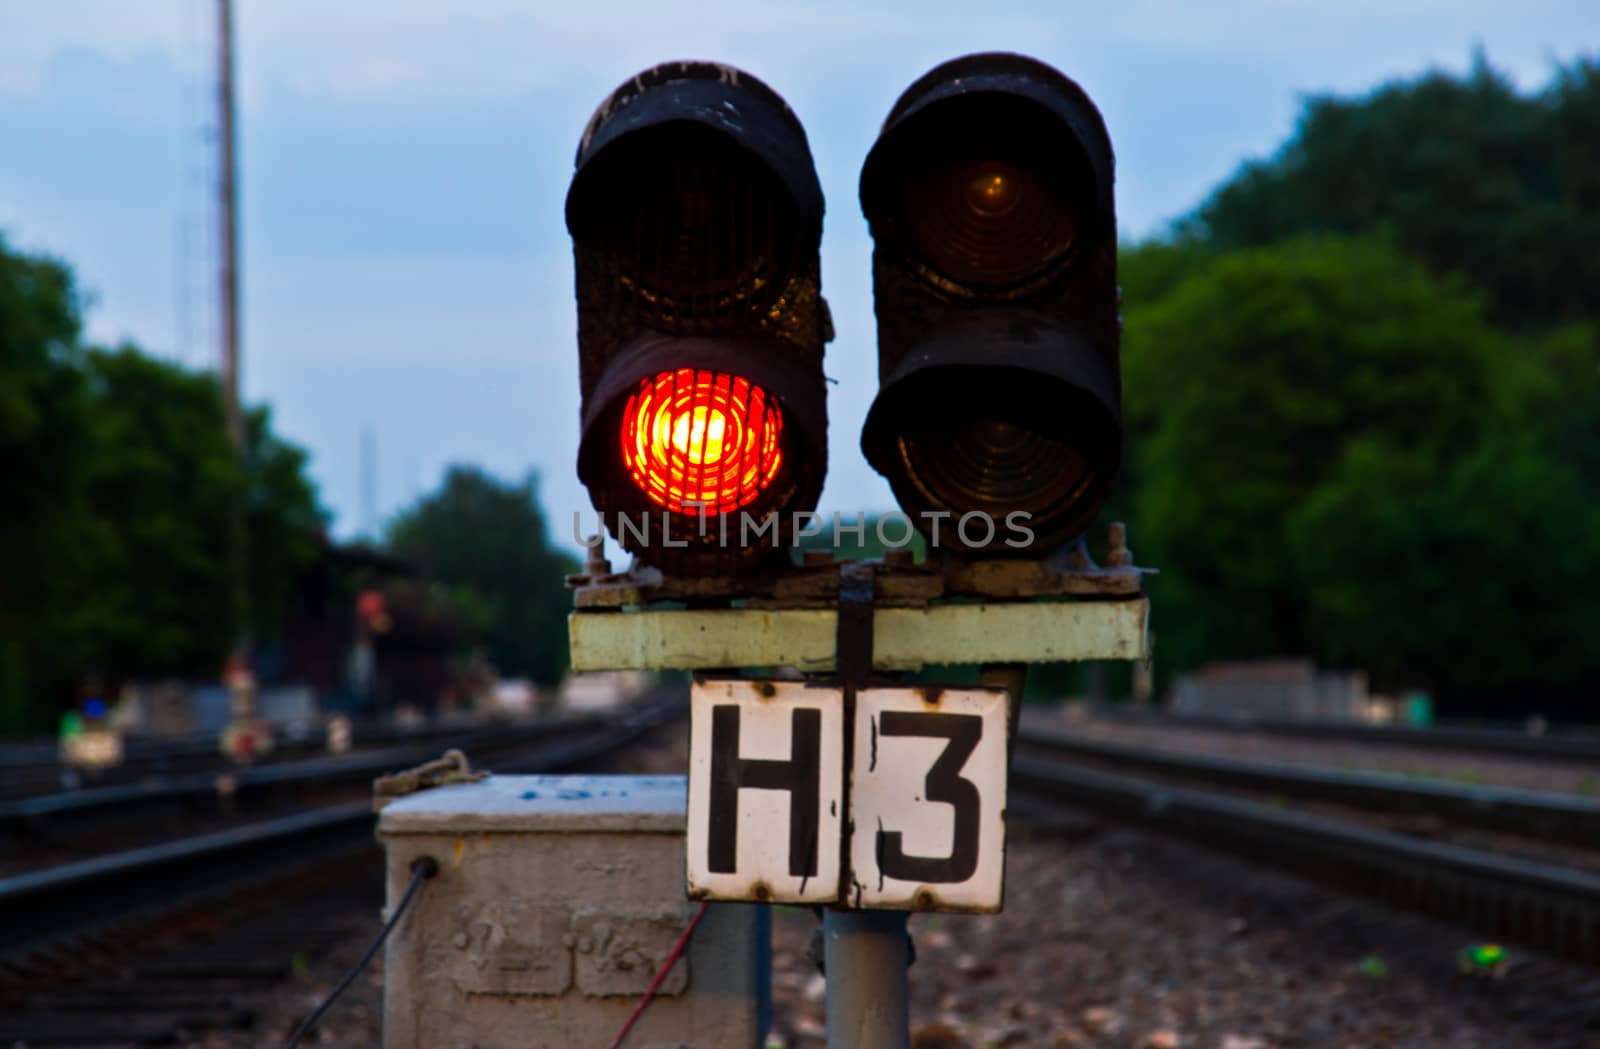 Railway red traffic light  by MskPhotoLife